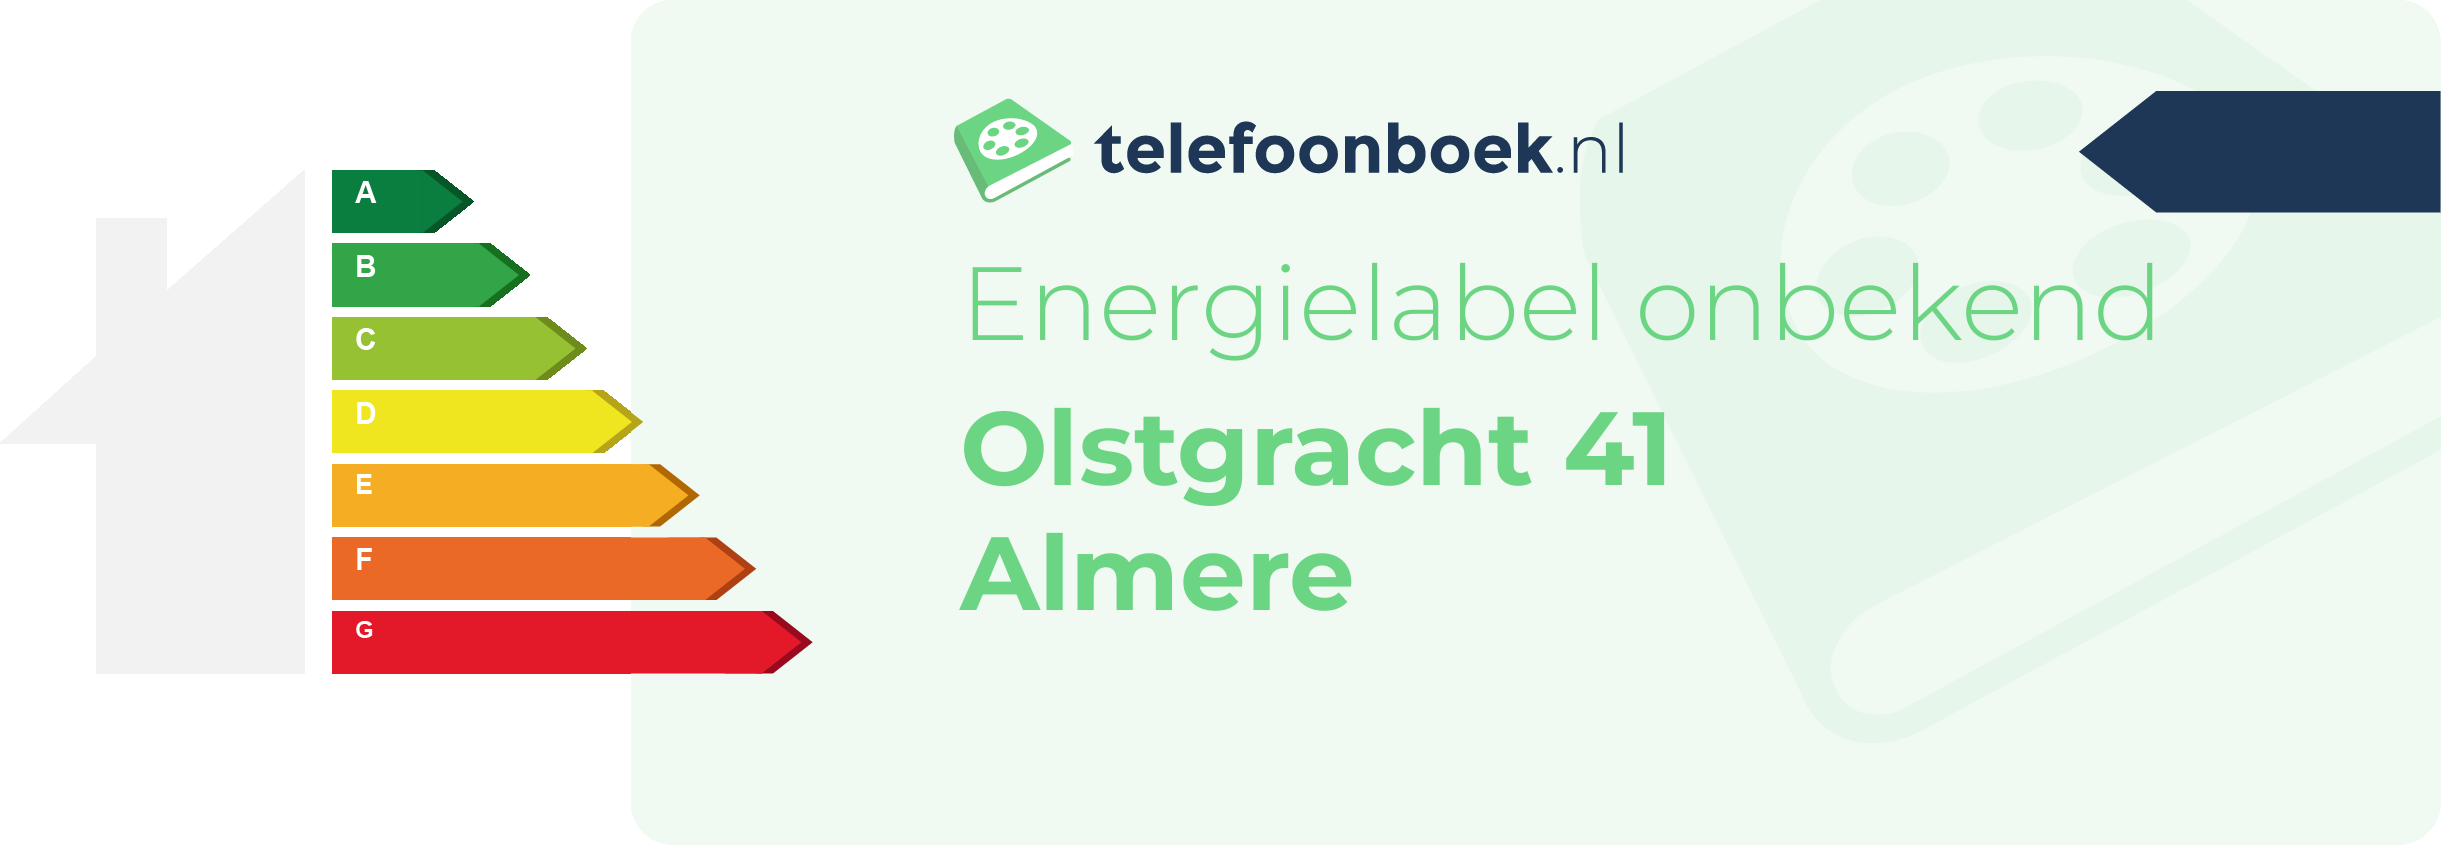 Energielabel Olstgracht 41 Almere